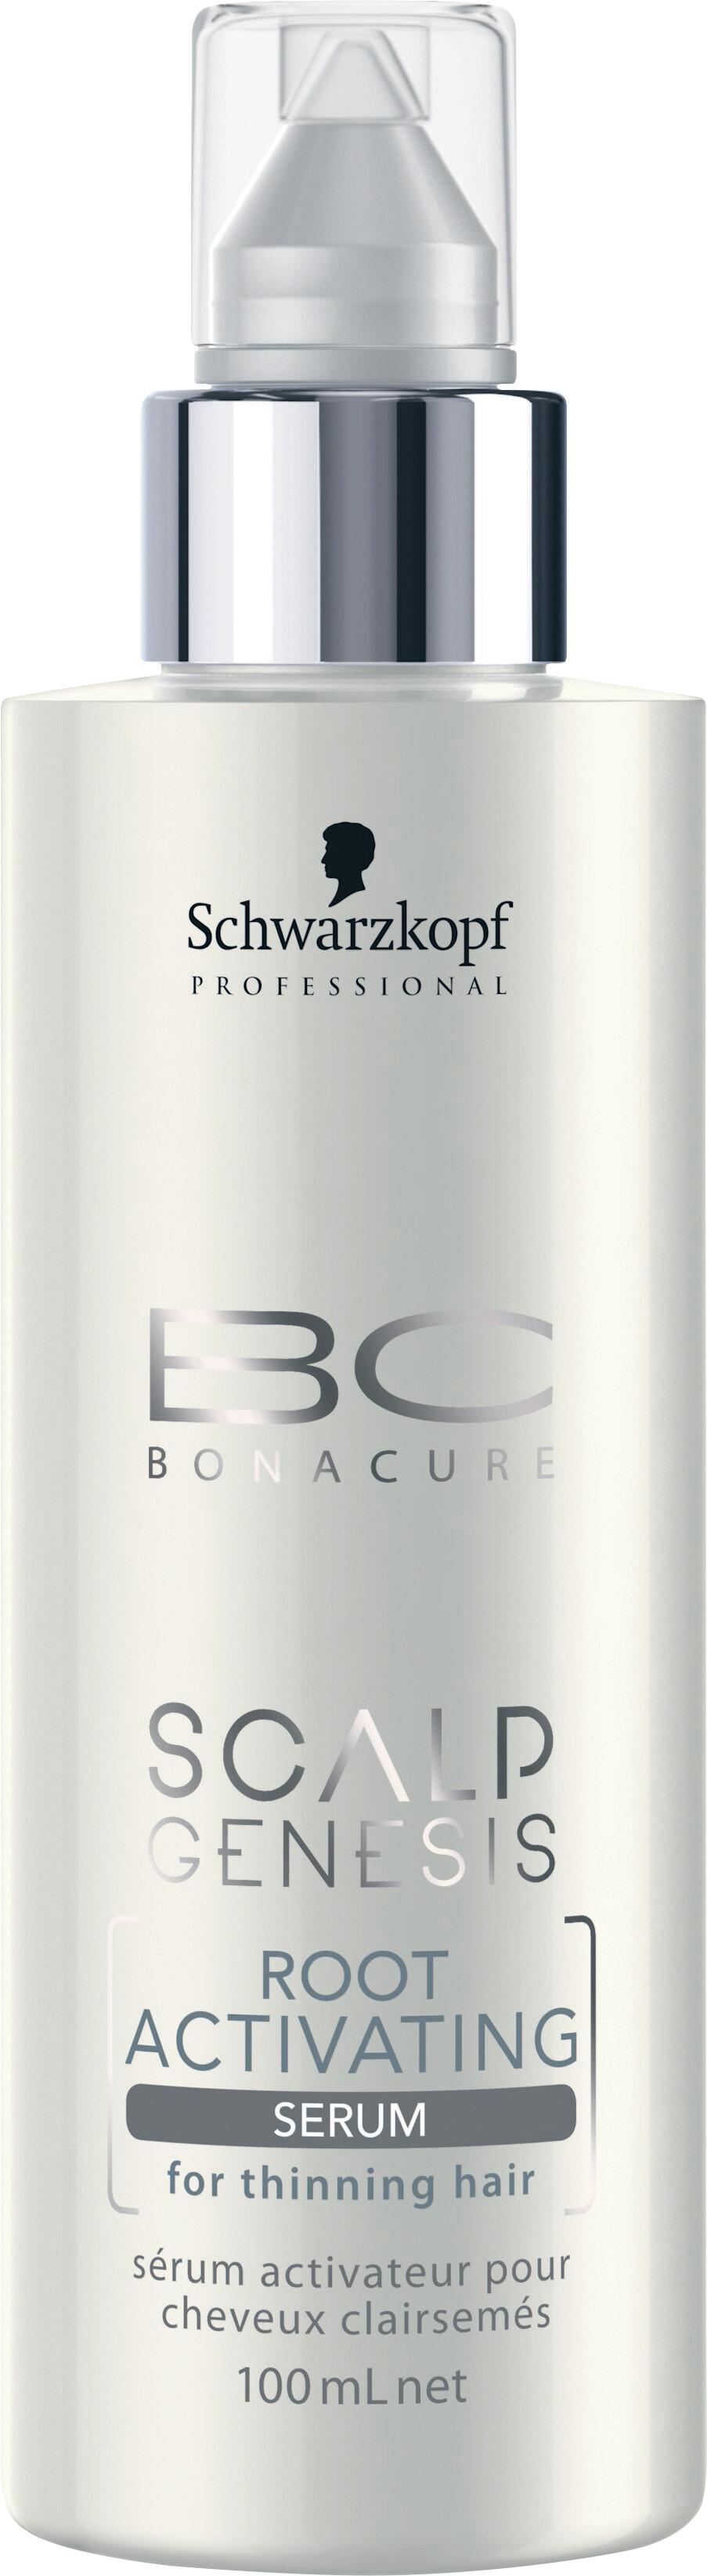 Schwarzkopf Professional BC Bonacure Scalp Genesis Root Activating Serum 100ml